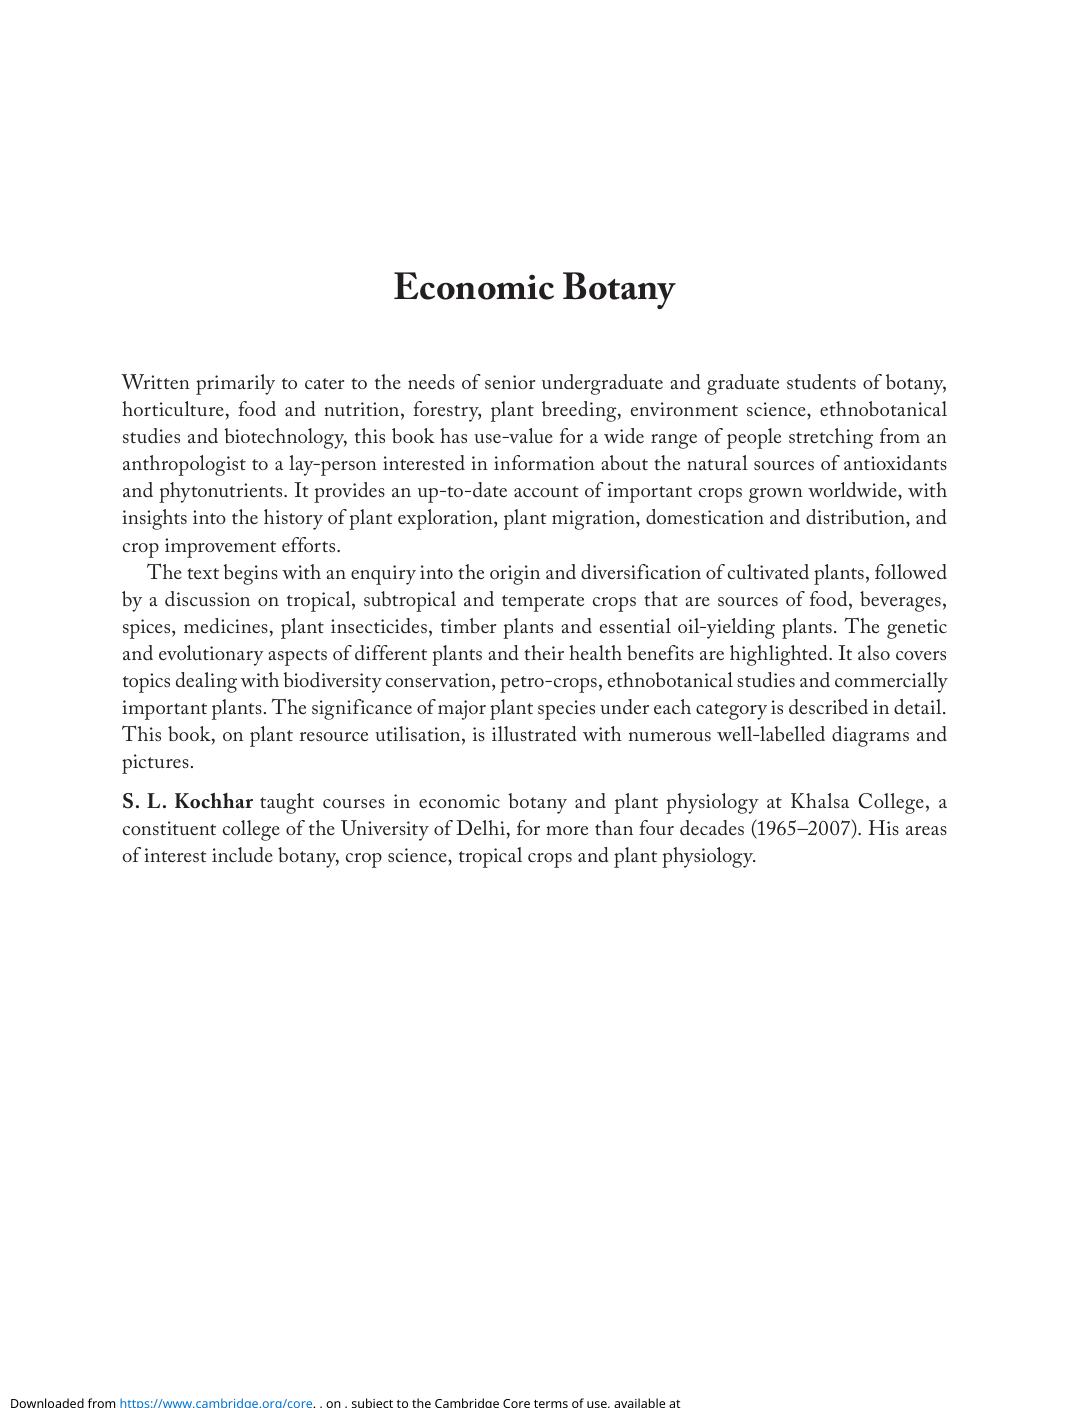 Economic Botany A Comprehensive Study by S. L. Kochhar 2016